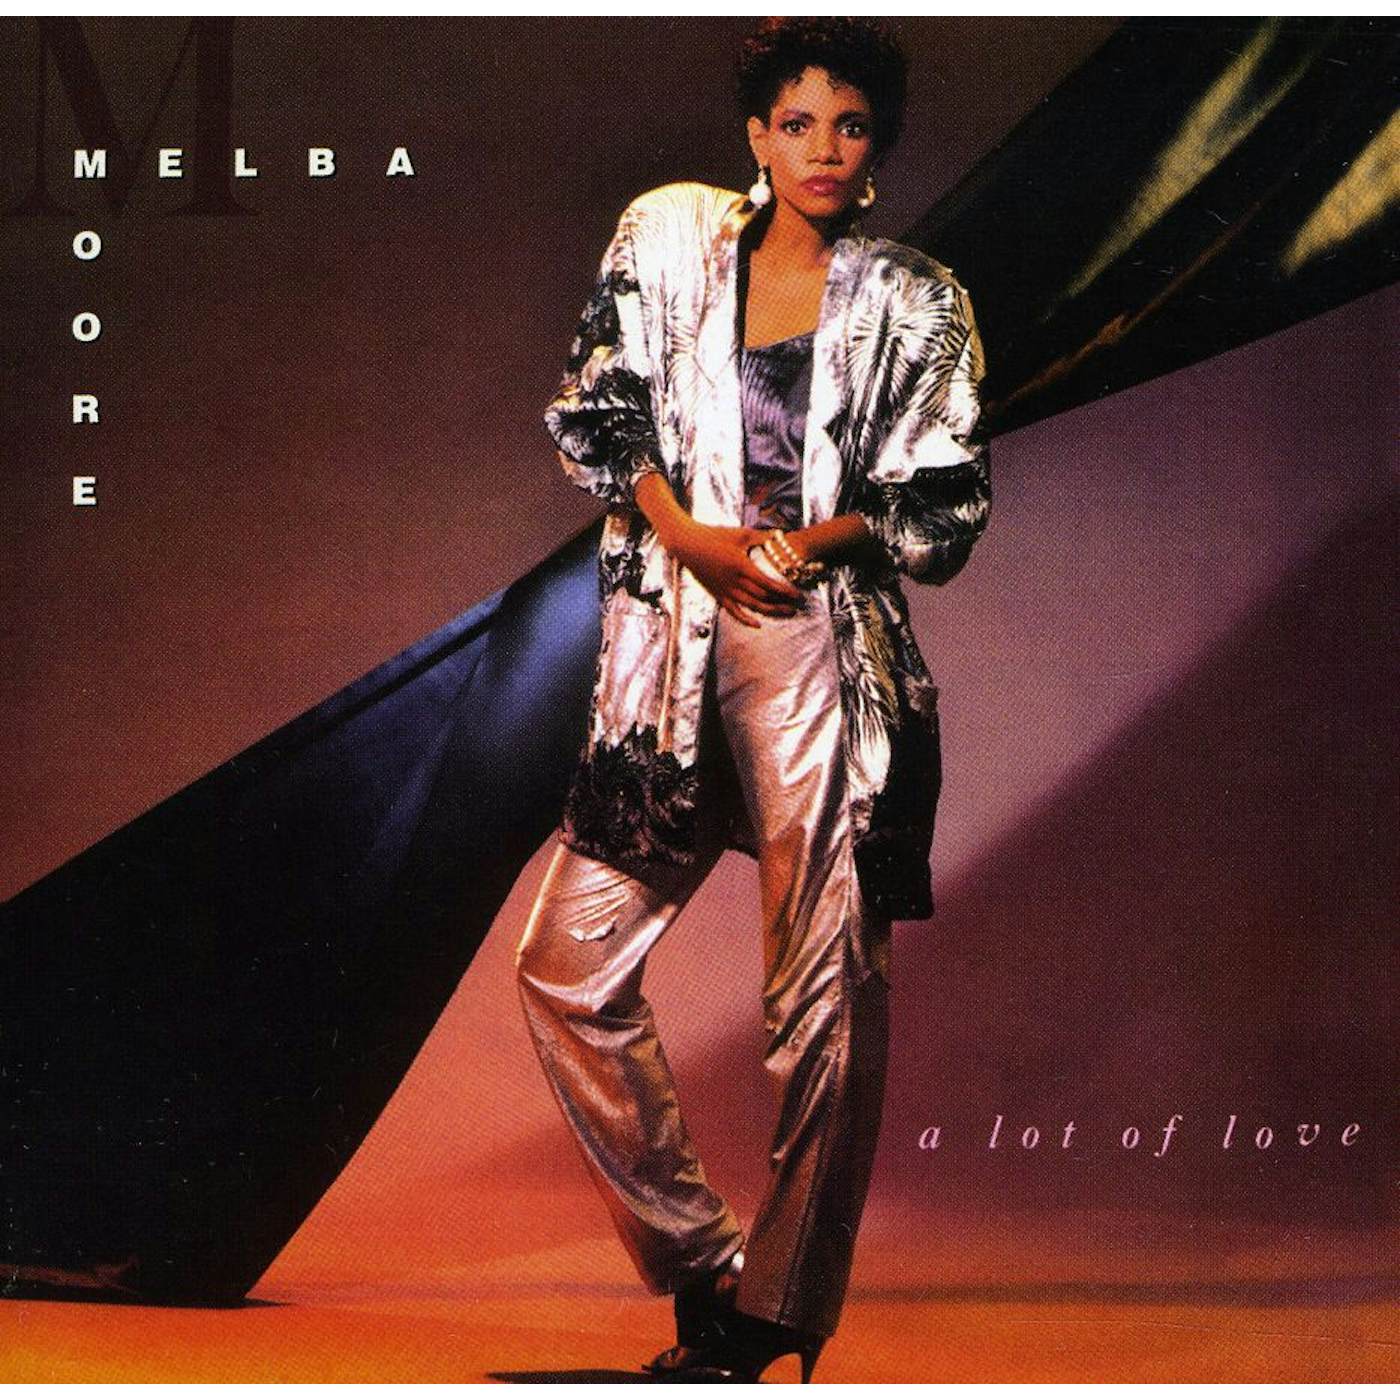 Melba Moore LOT OF LOVE CD